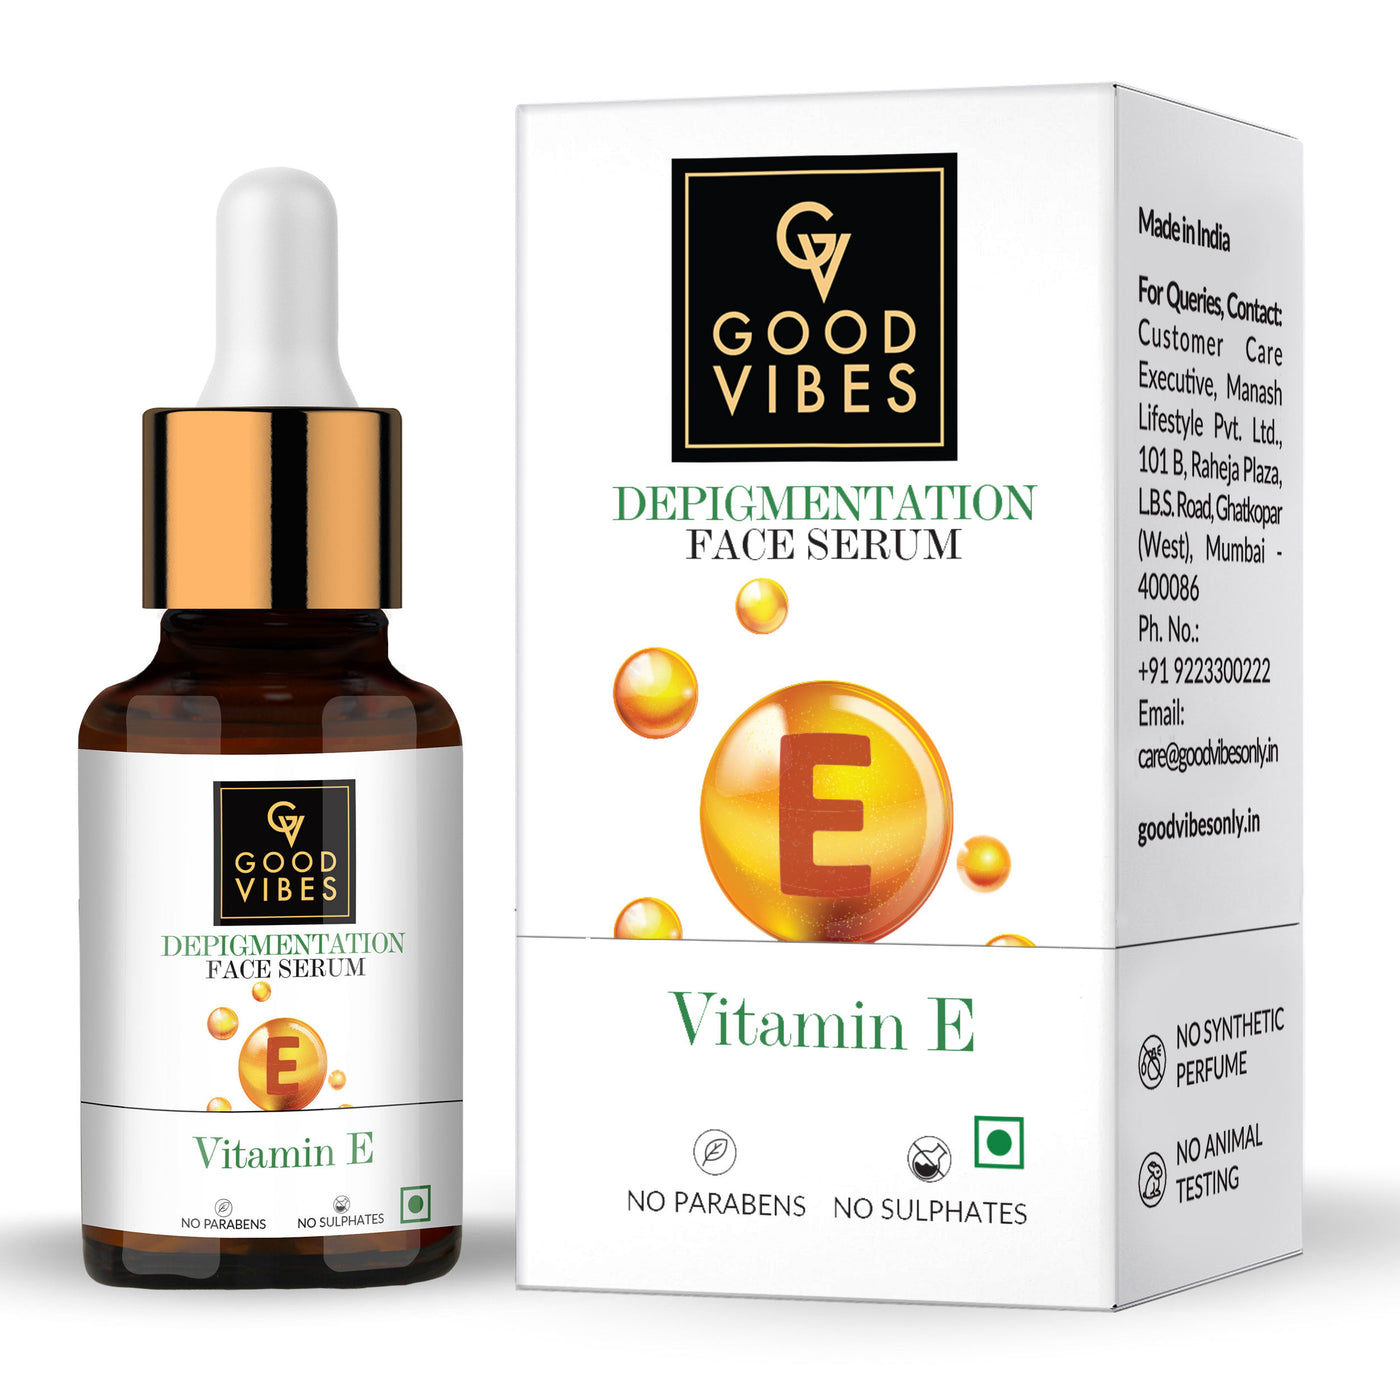 good-vibes-vitamin-e-de-pigmentation-skin-serum-uv-protection-antioxidant-with-liquorice-no-parabens-no-sulphates-no-animal-testing-10-ml-1